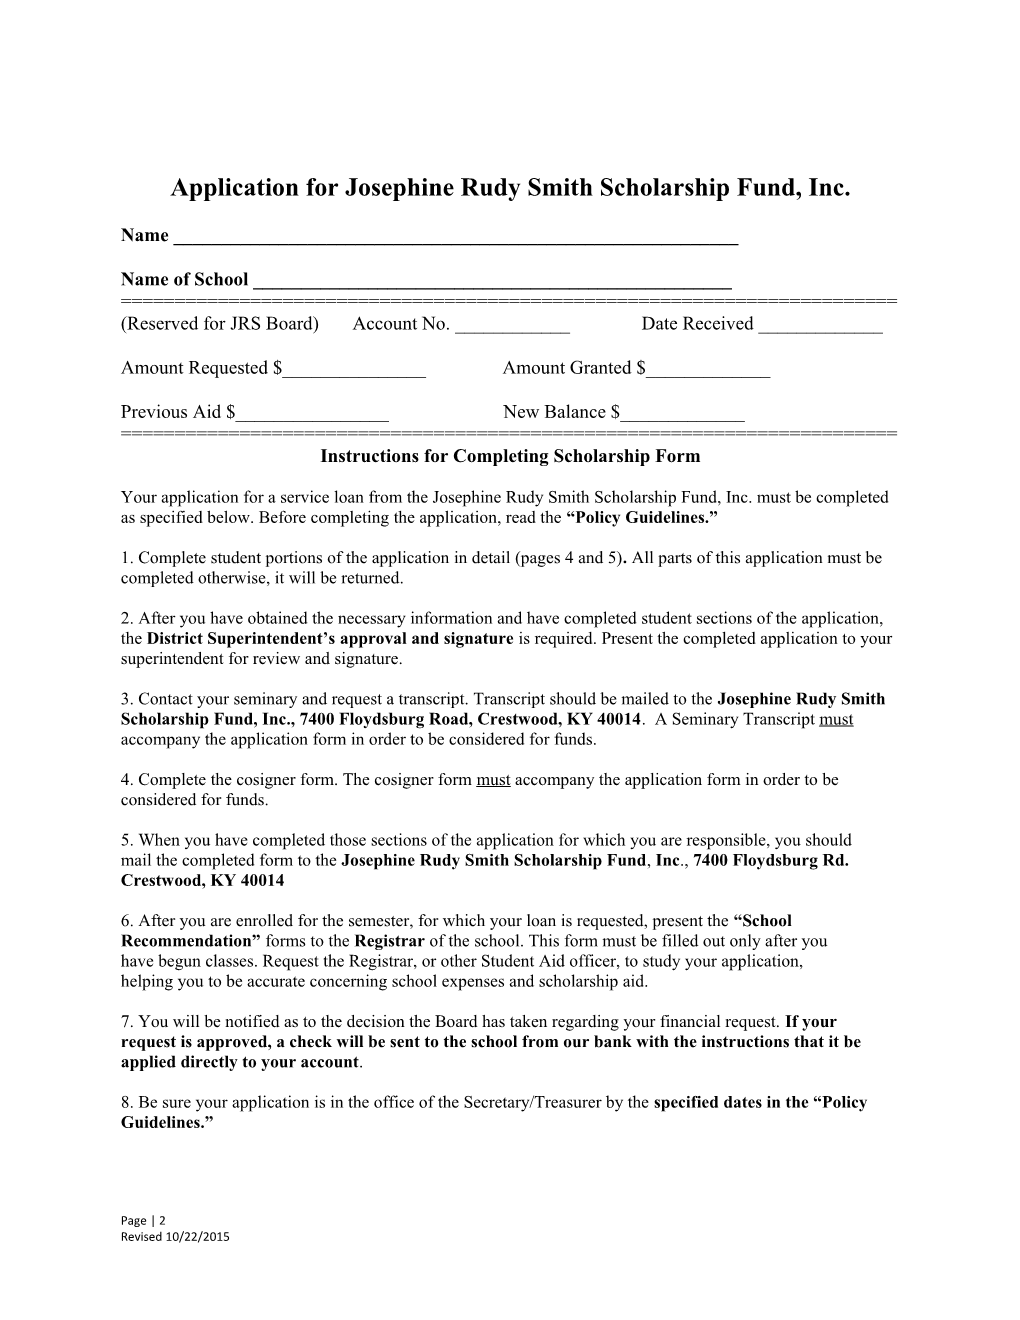 The Josephine Rudy Smith Scholarship Fund